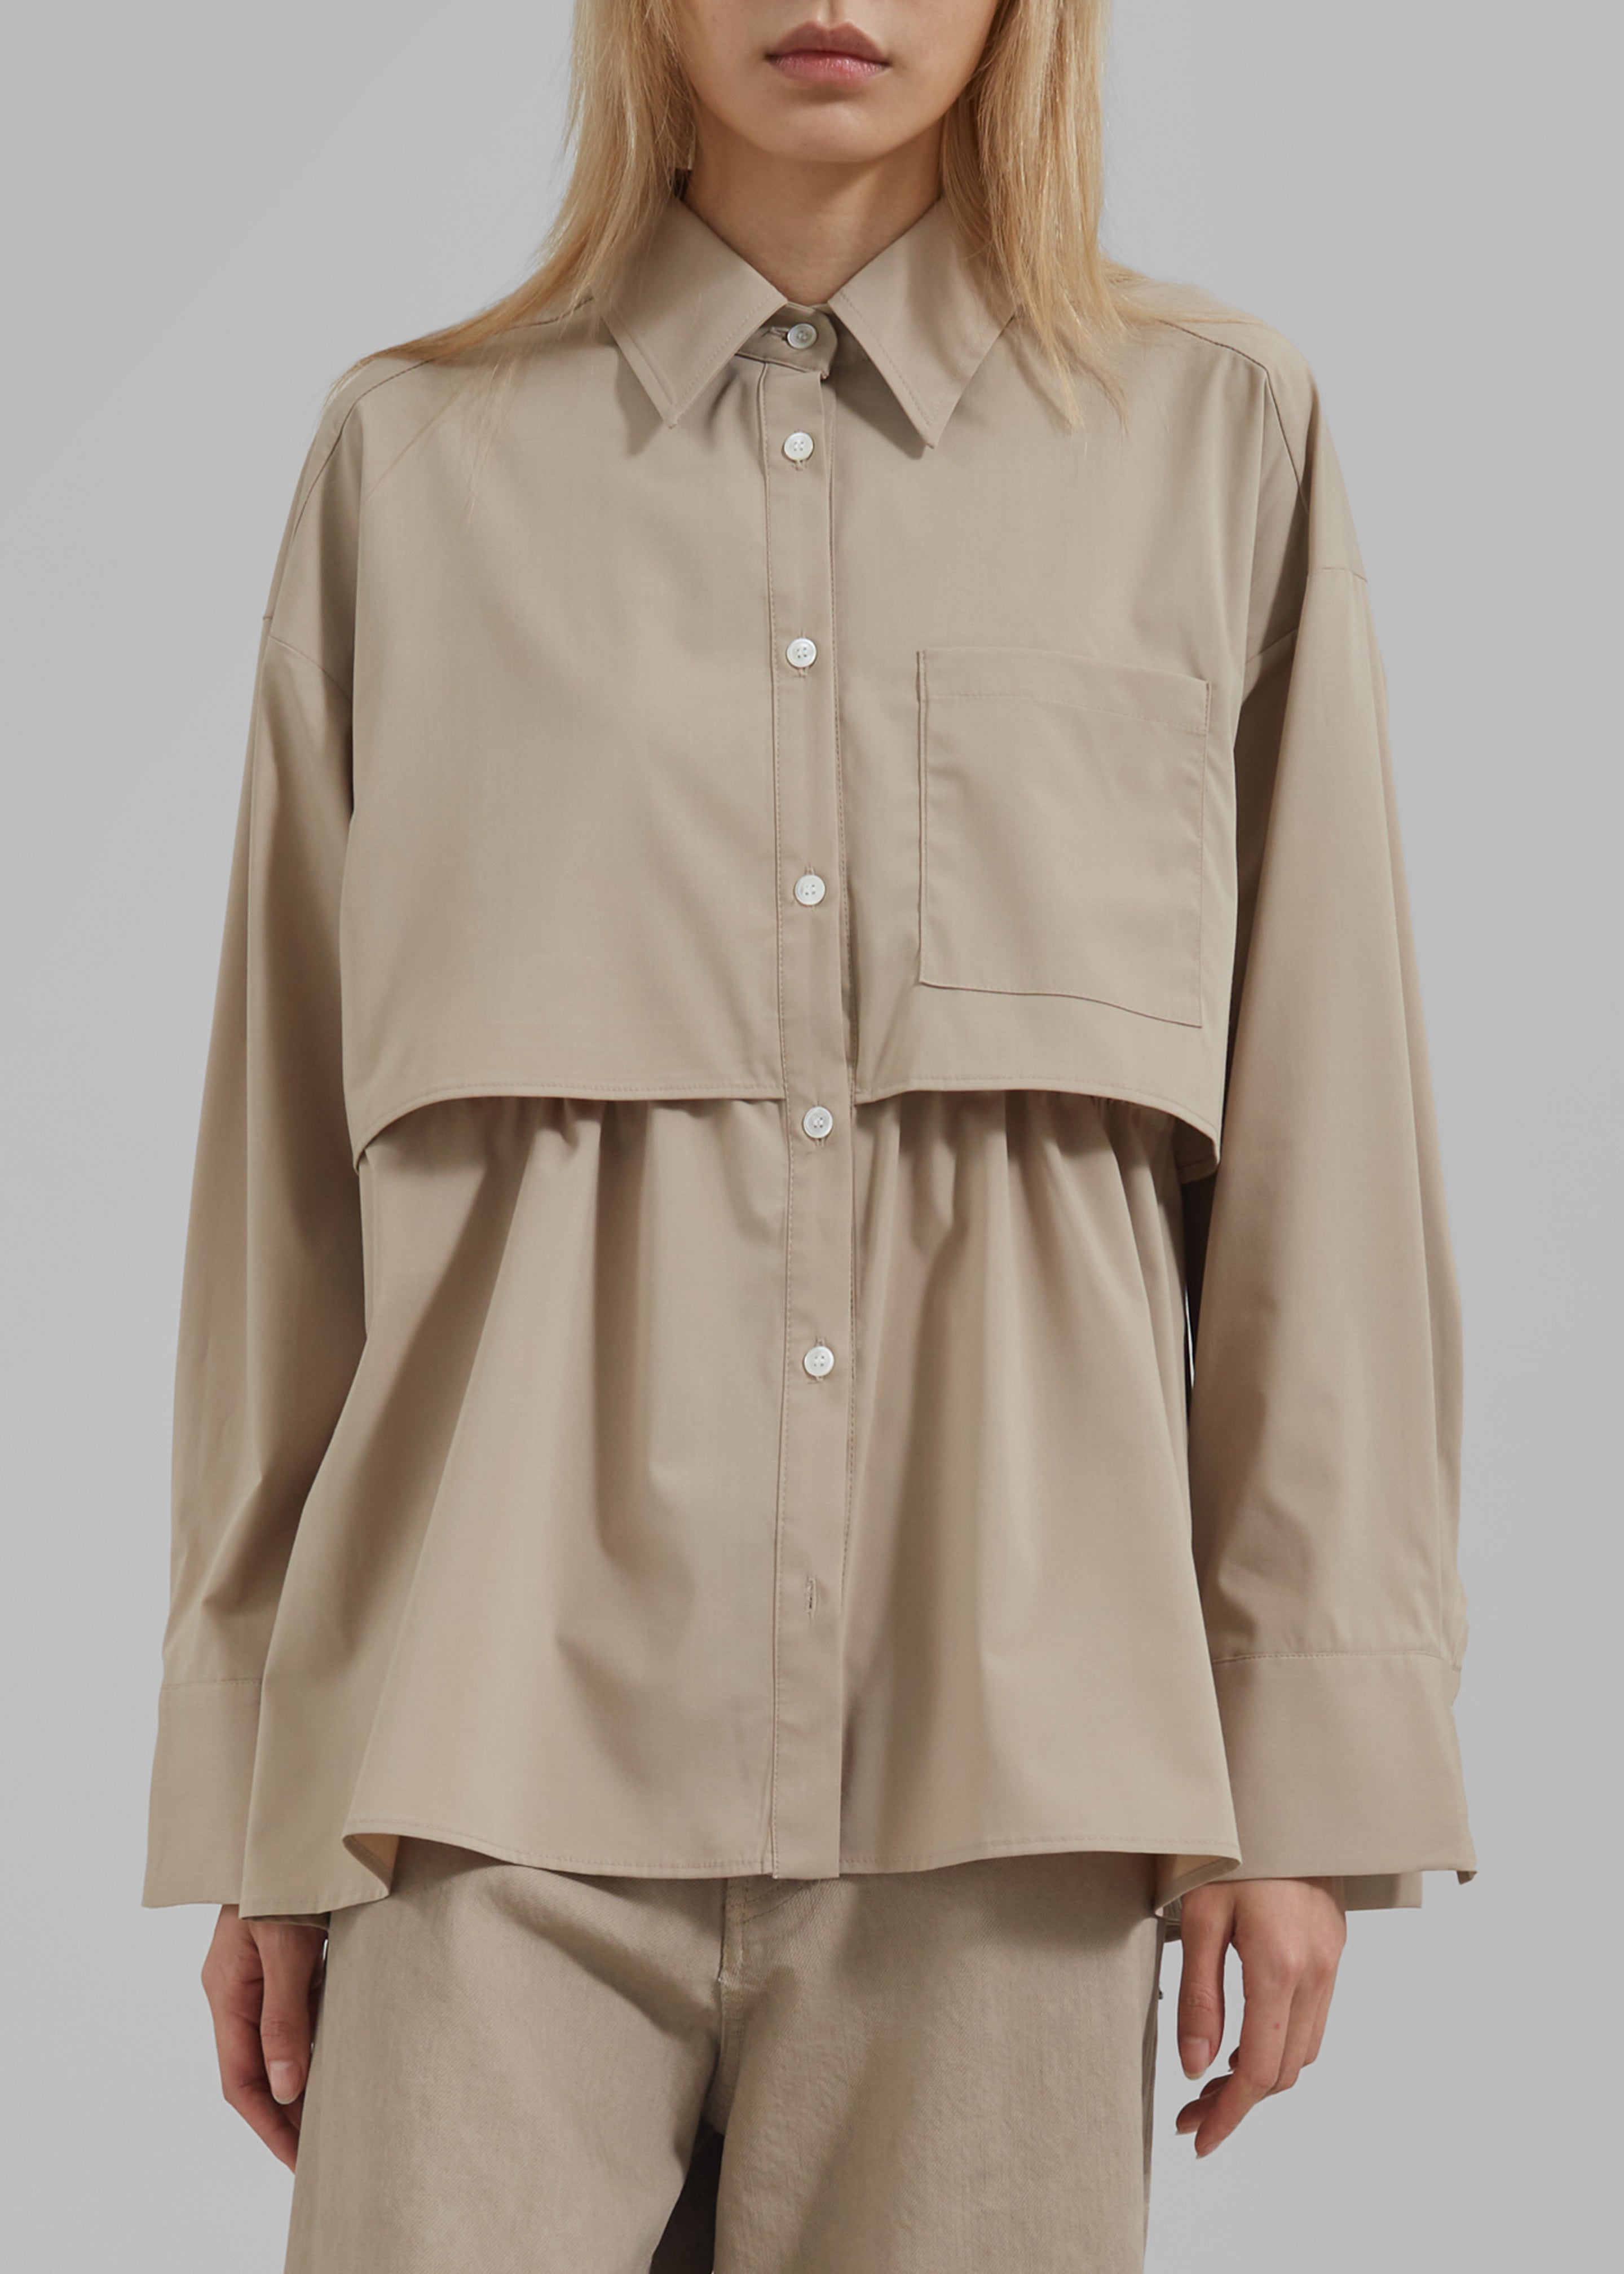 Bria Layered Button Up Shirt - Beige - 7